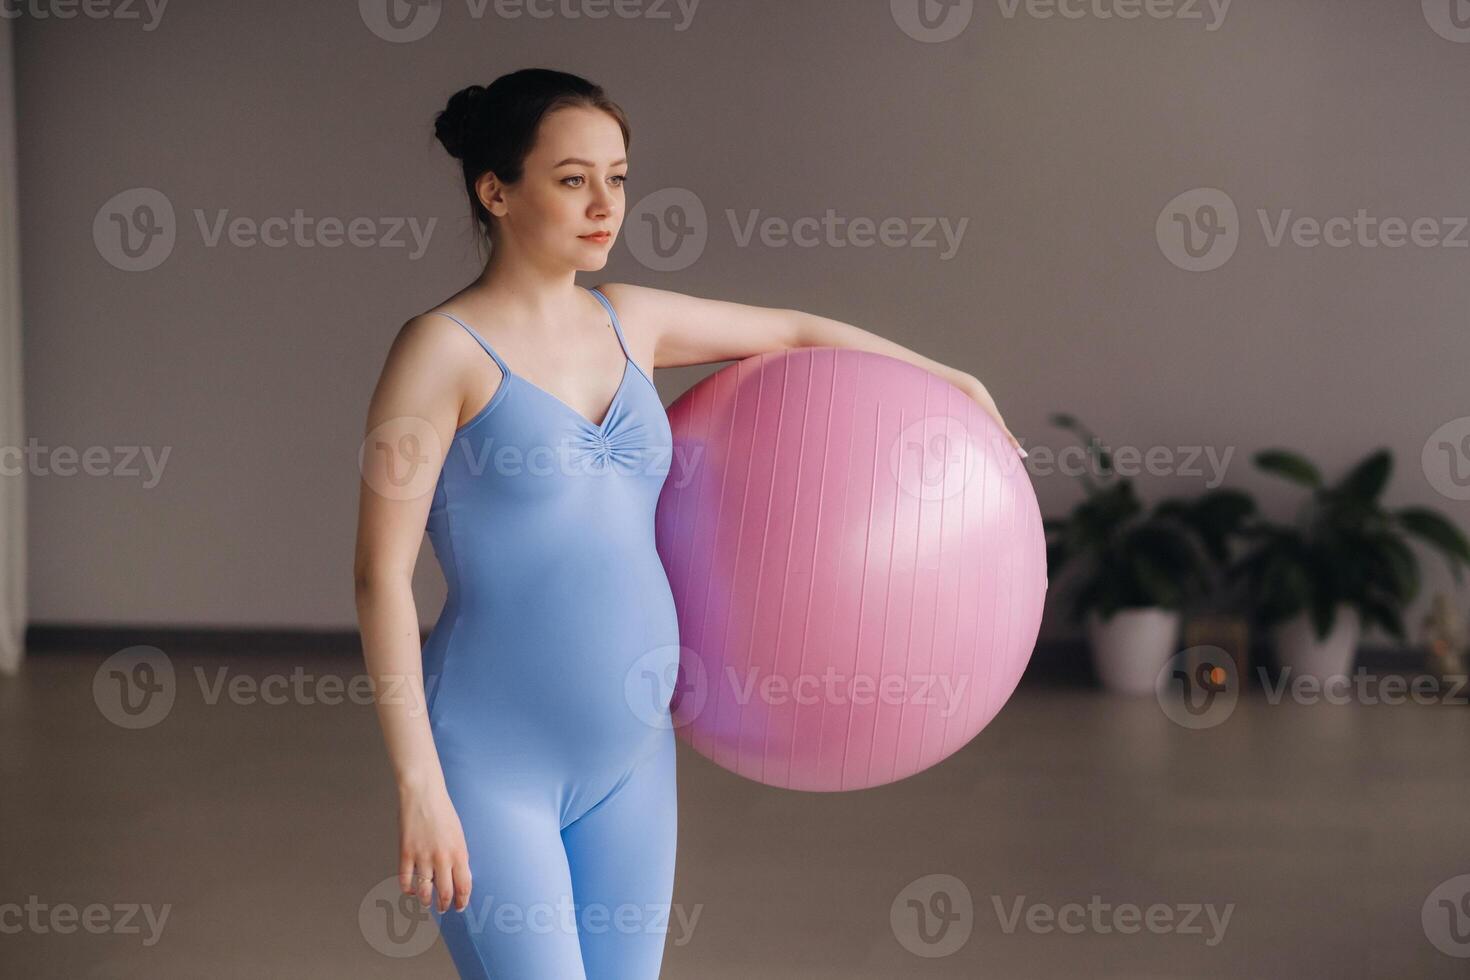 embarazada mujer durante aptitud clases con un fitball foto